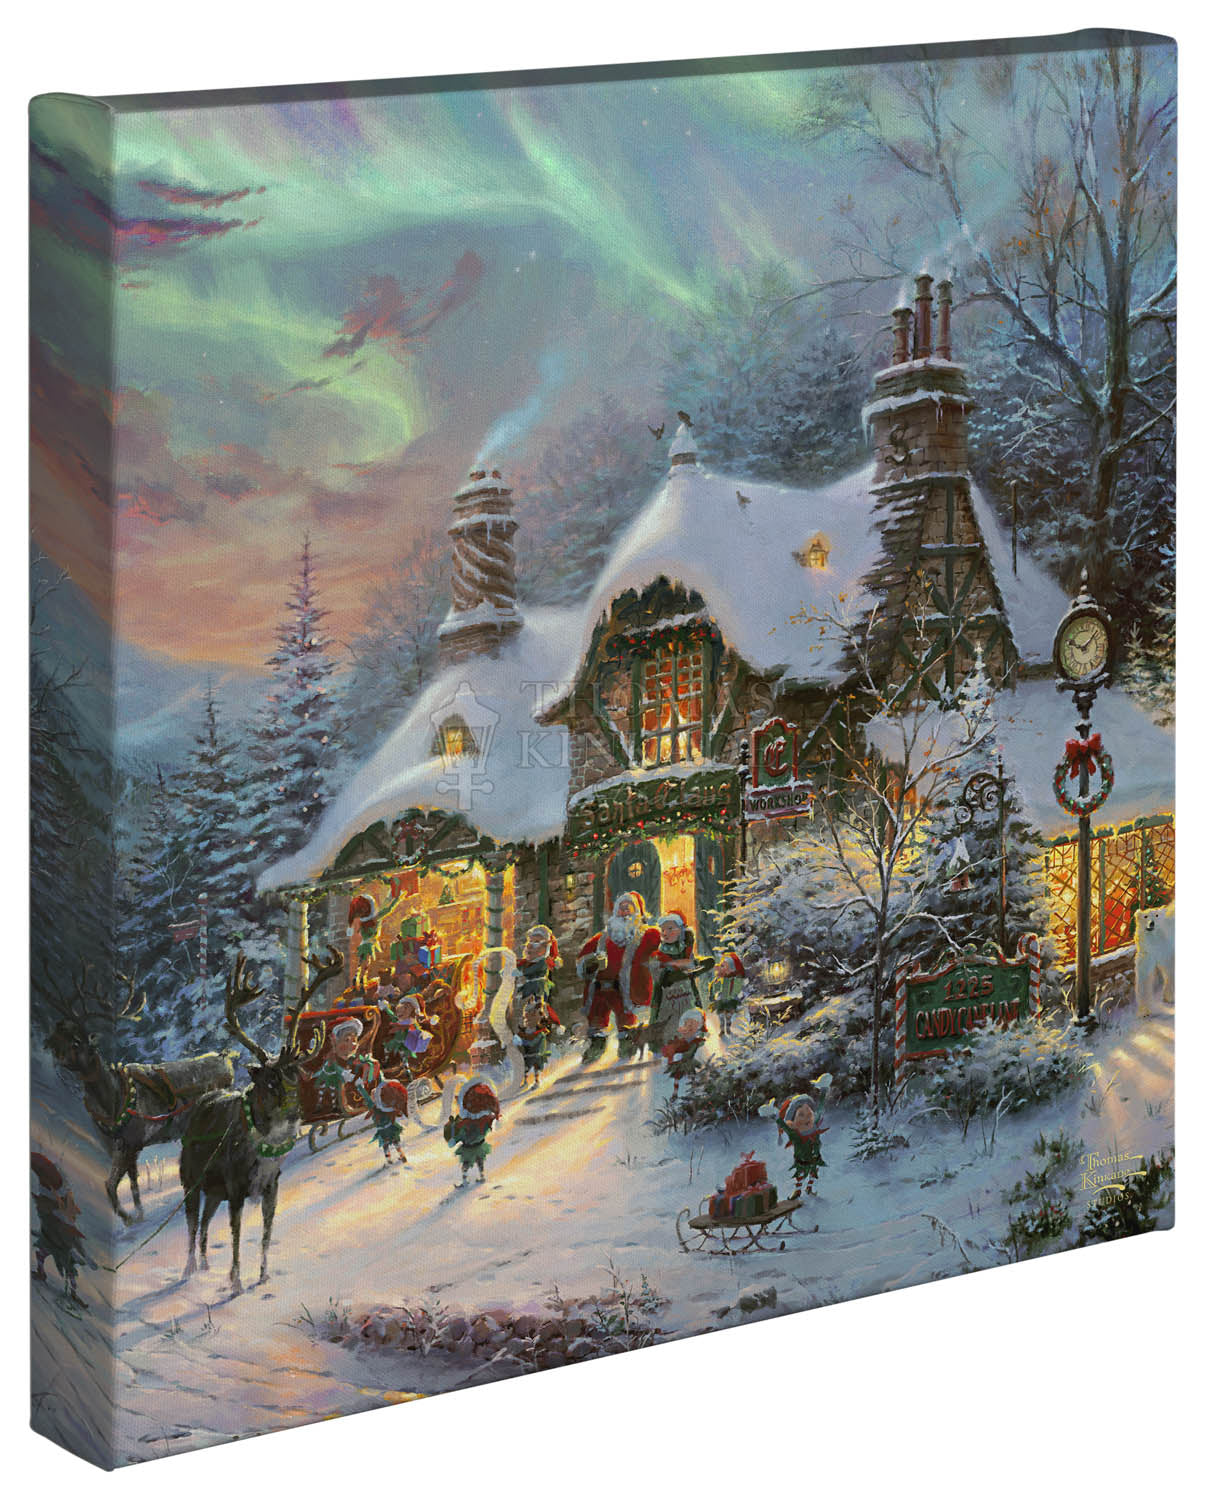 Thomas Kinkade Christmas Lodge 14 x 14 Gallery Wrapped Canvas